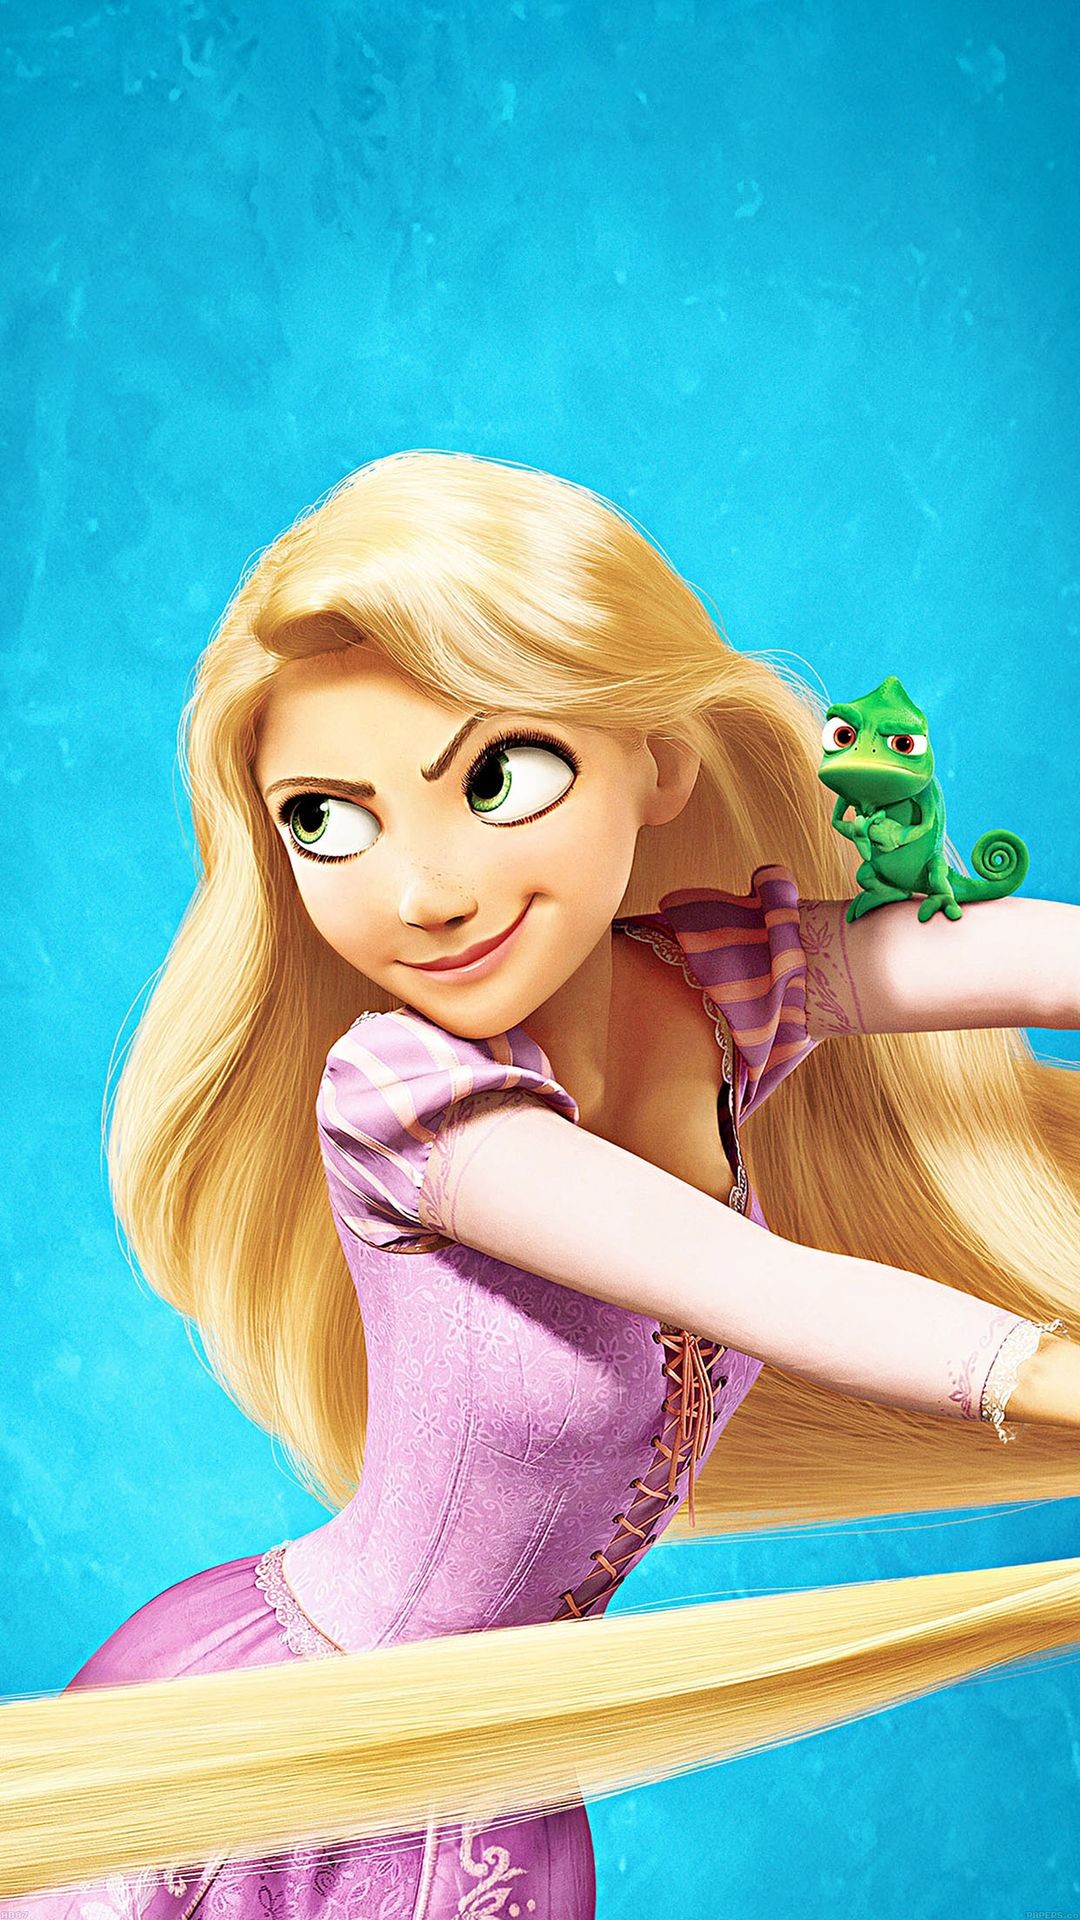 1080x1920 Tap image for more iPhone Disney wallpaper! Tangled Princess Rapunzel -  @mobile9 | Wallpapers